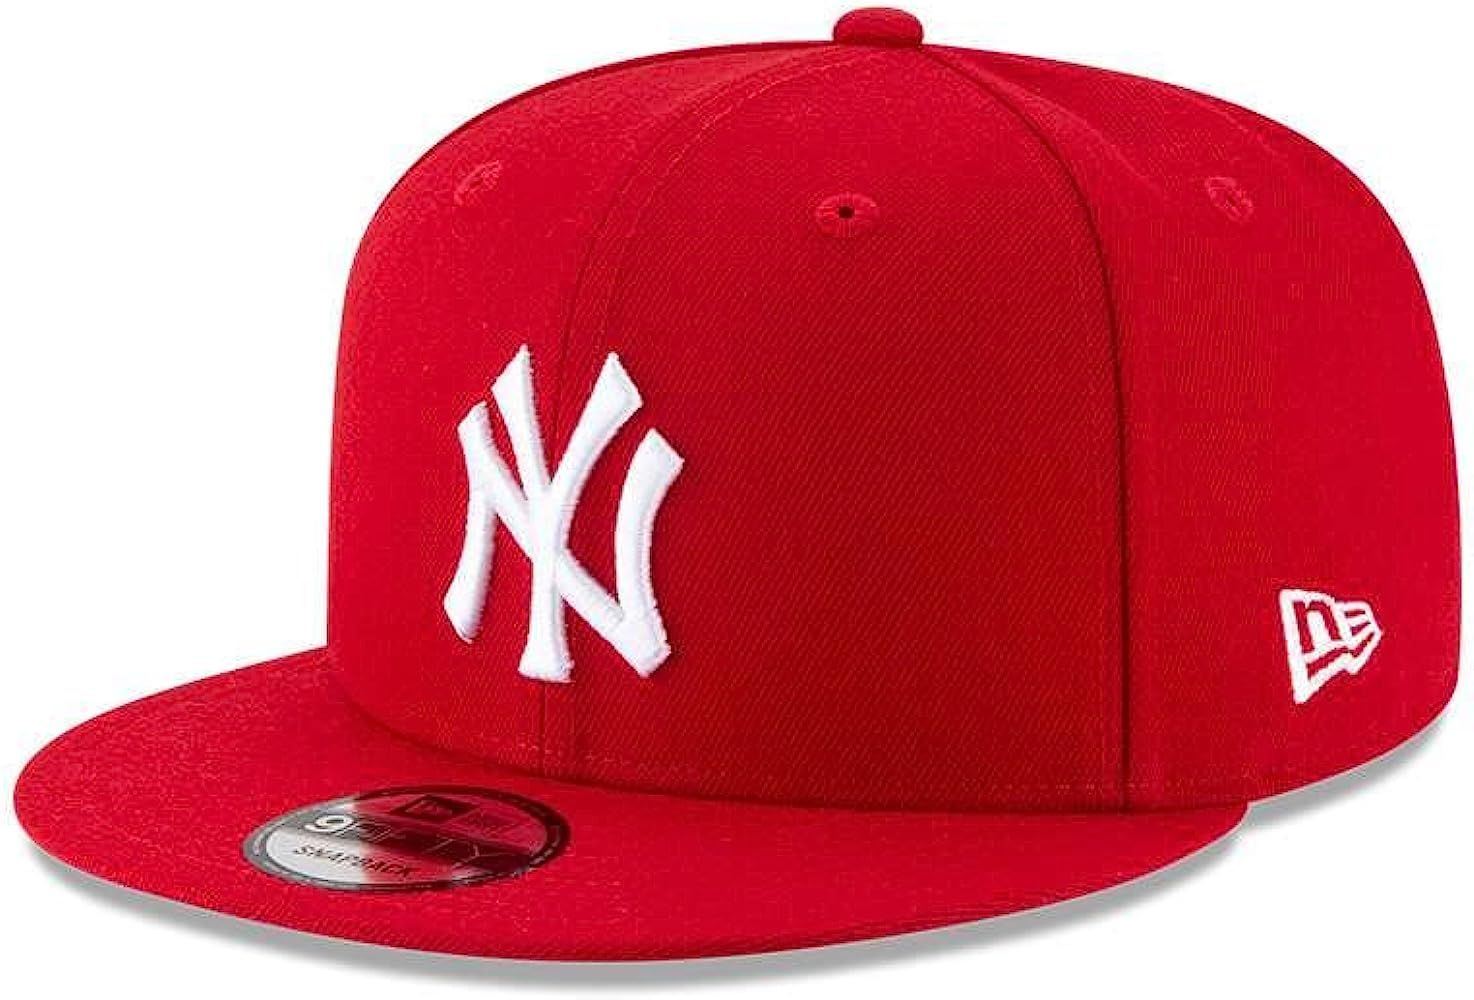 New Era MLB 9FIFTY Black Adjustable Snapback Hat Cap One Size Fits All | Amazon (US)